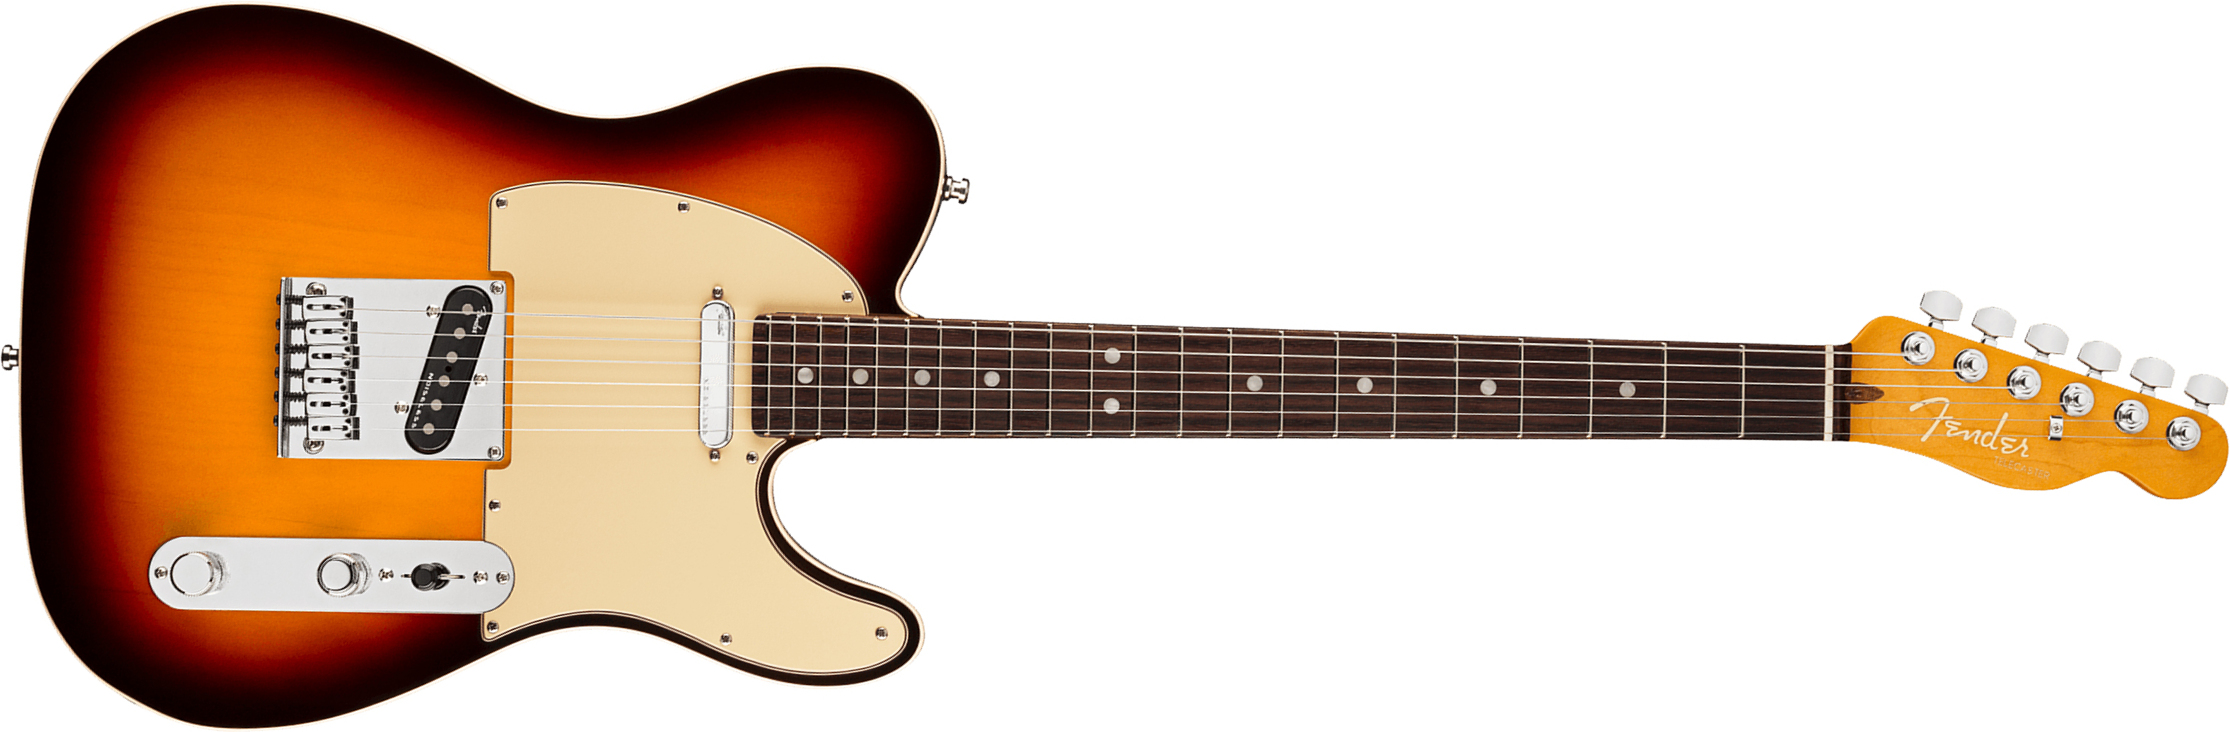 Fender Tele American Ultra 2019 Usa Rw - Ultraburst - Televorm elektrische gitaar - Main picture